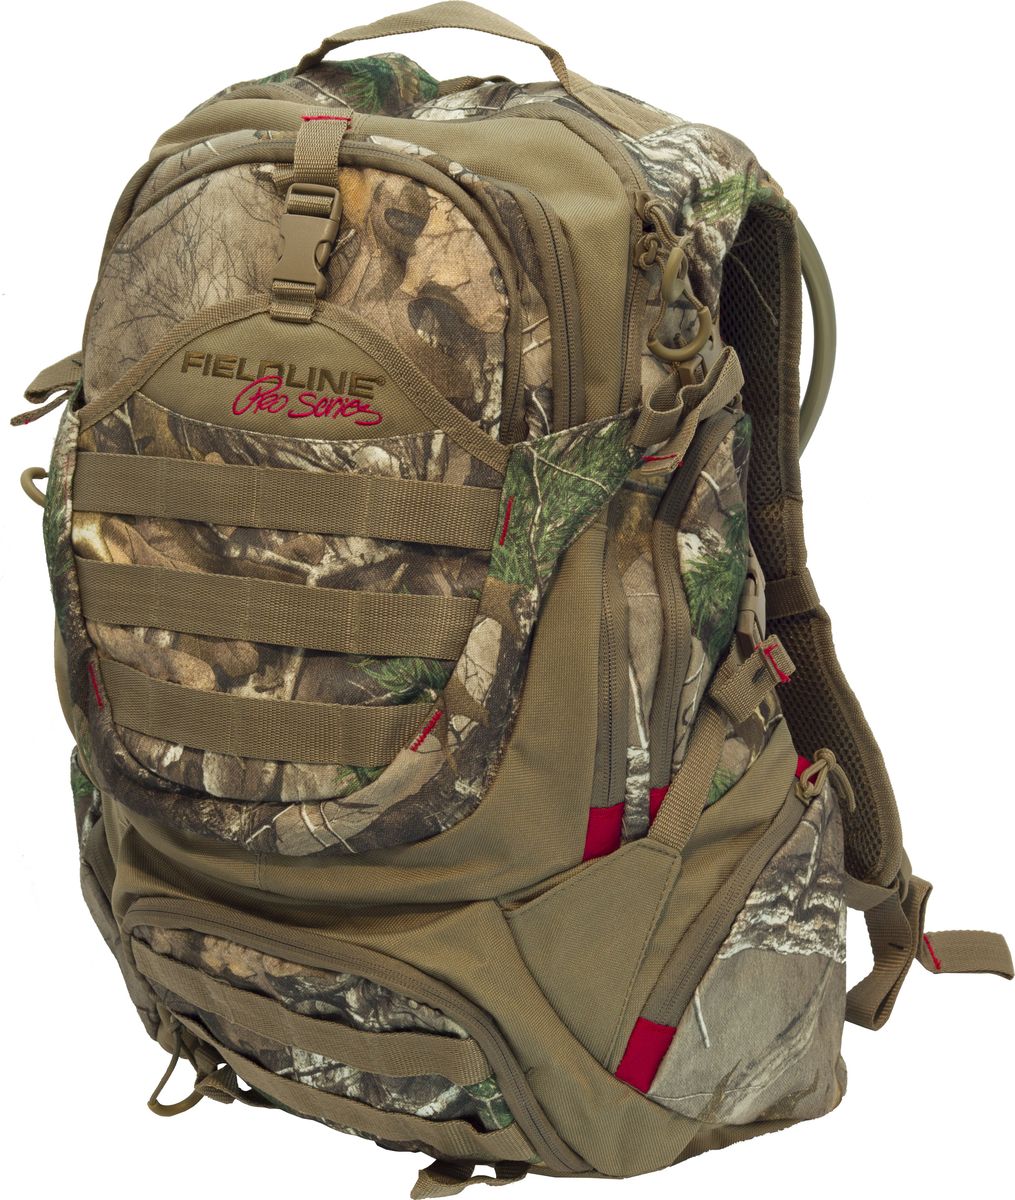 фото Рюкзак для охоты Fieldline "Ultimate Hunter's 2 Day Pack", цвет: камуфляж, светло-коричневый